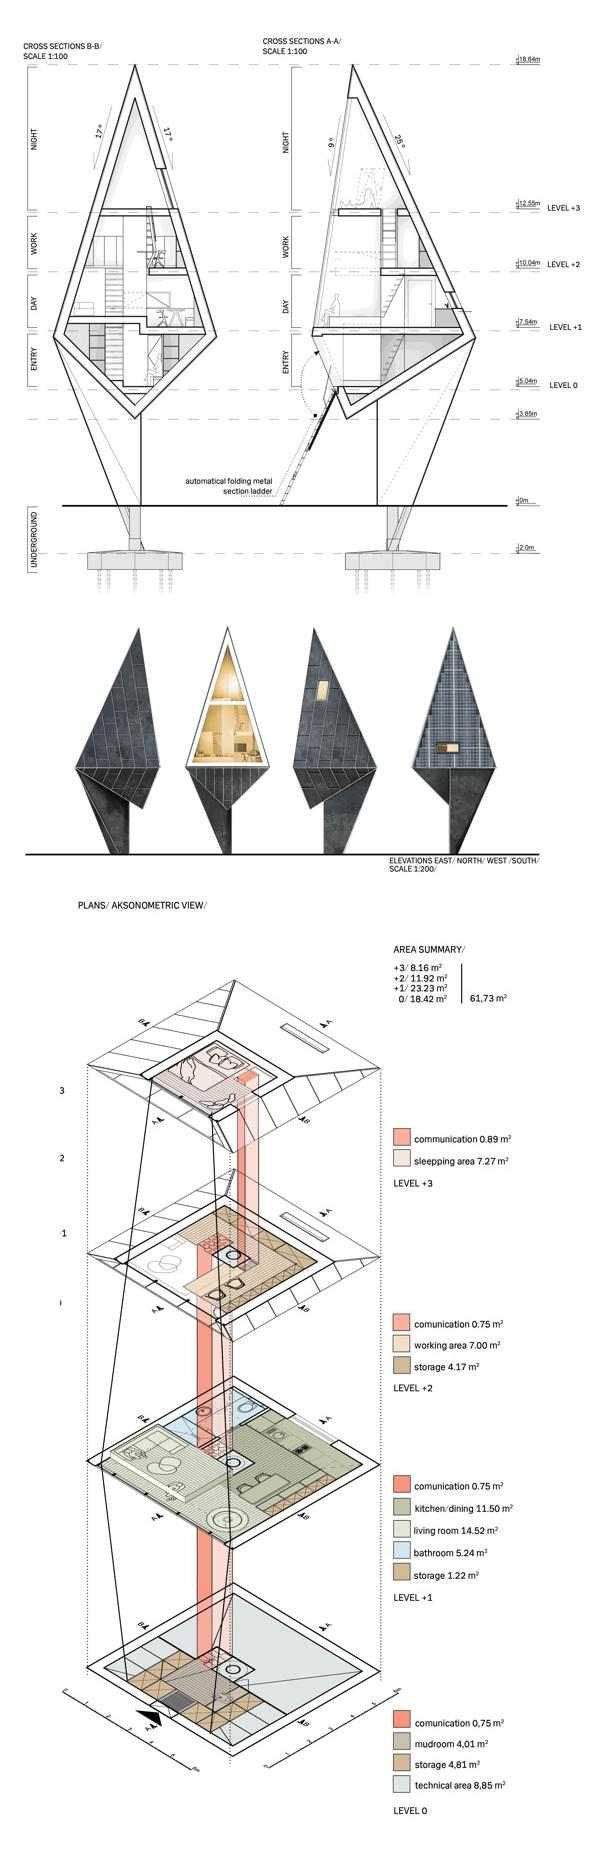 Passivhus Konrad-Wójcik projektkoncept 3d visualiseringar arkitektur